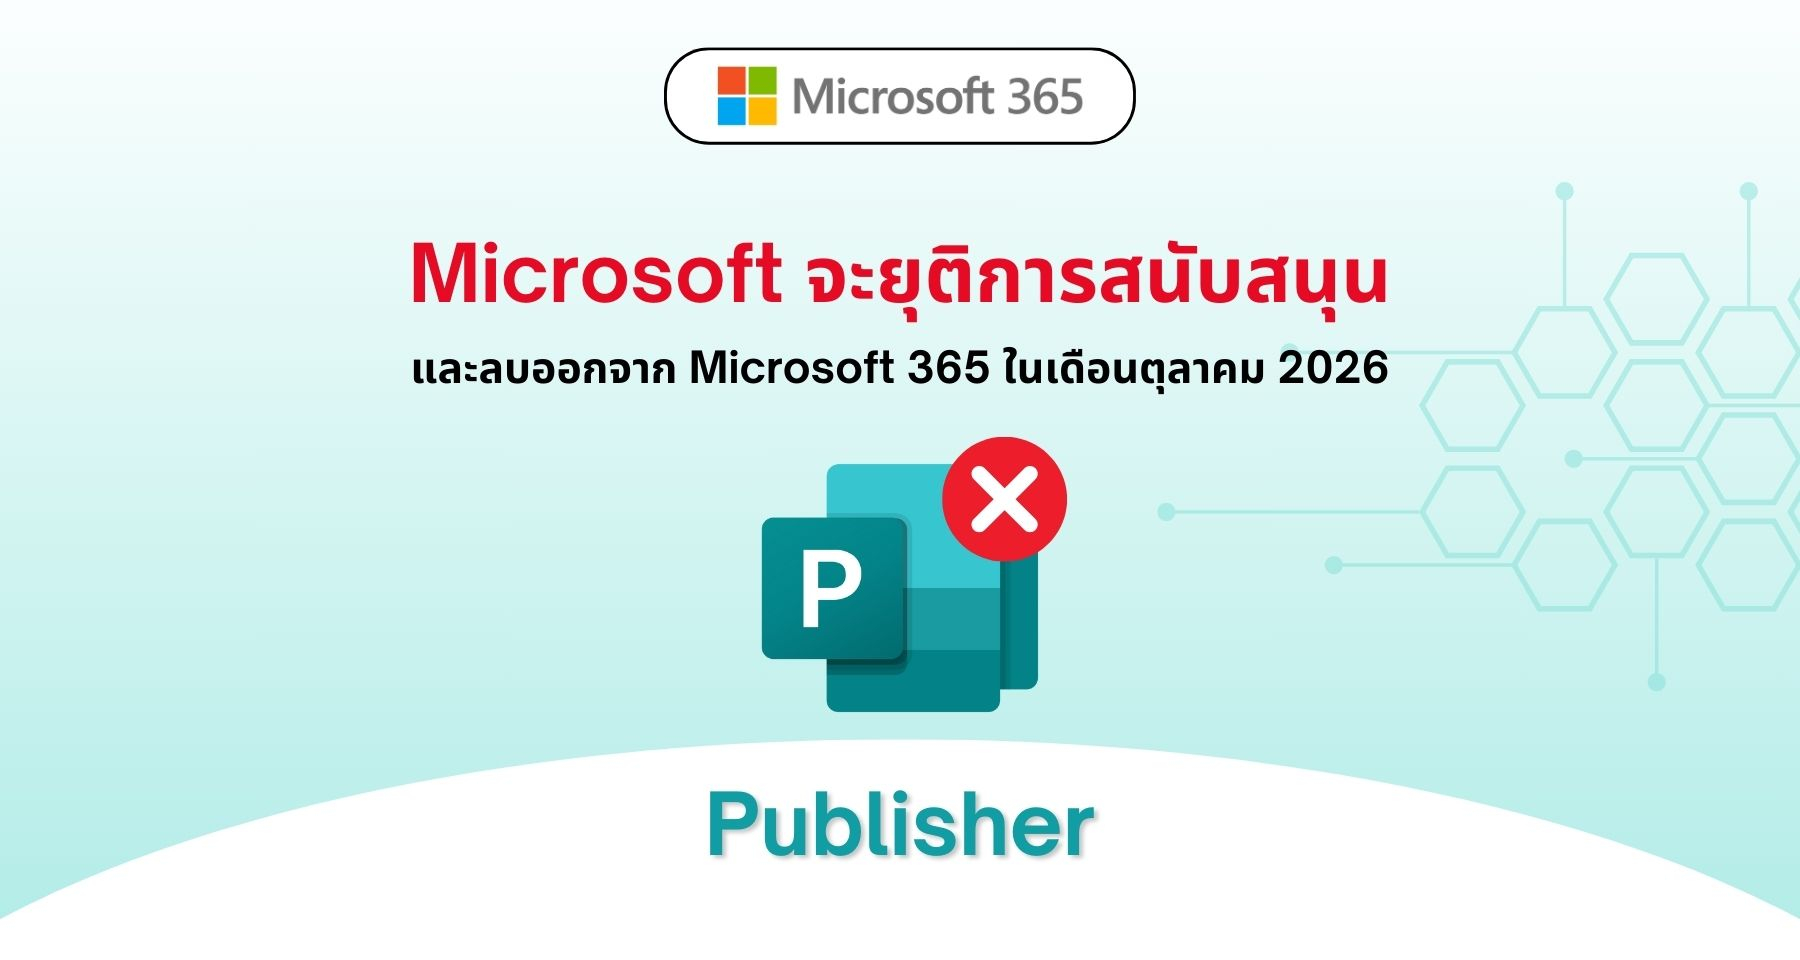 Microsoft จะยุติการสนับสนุน Publisher และลบออกจาก Microsoft 365 ในเดือนตุลาคม 2026